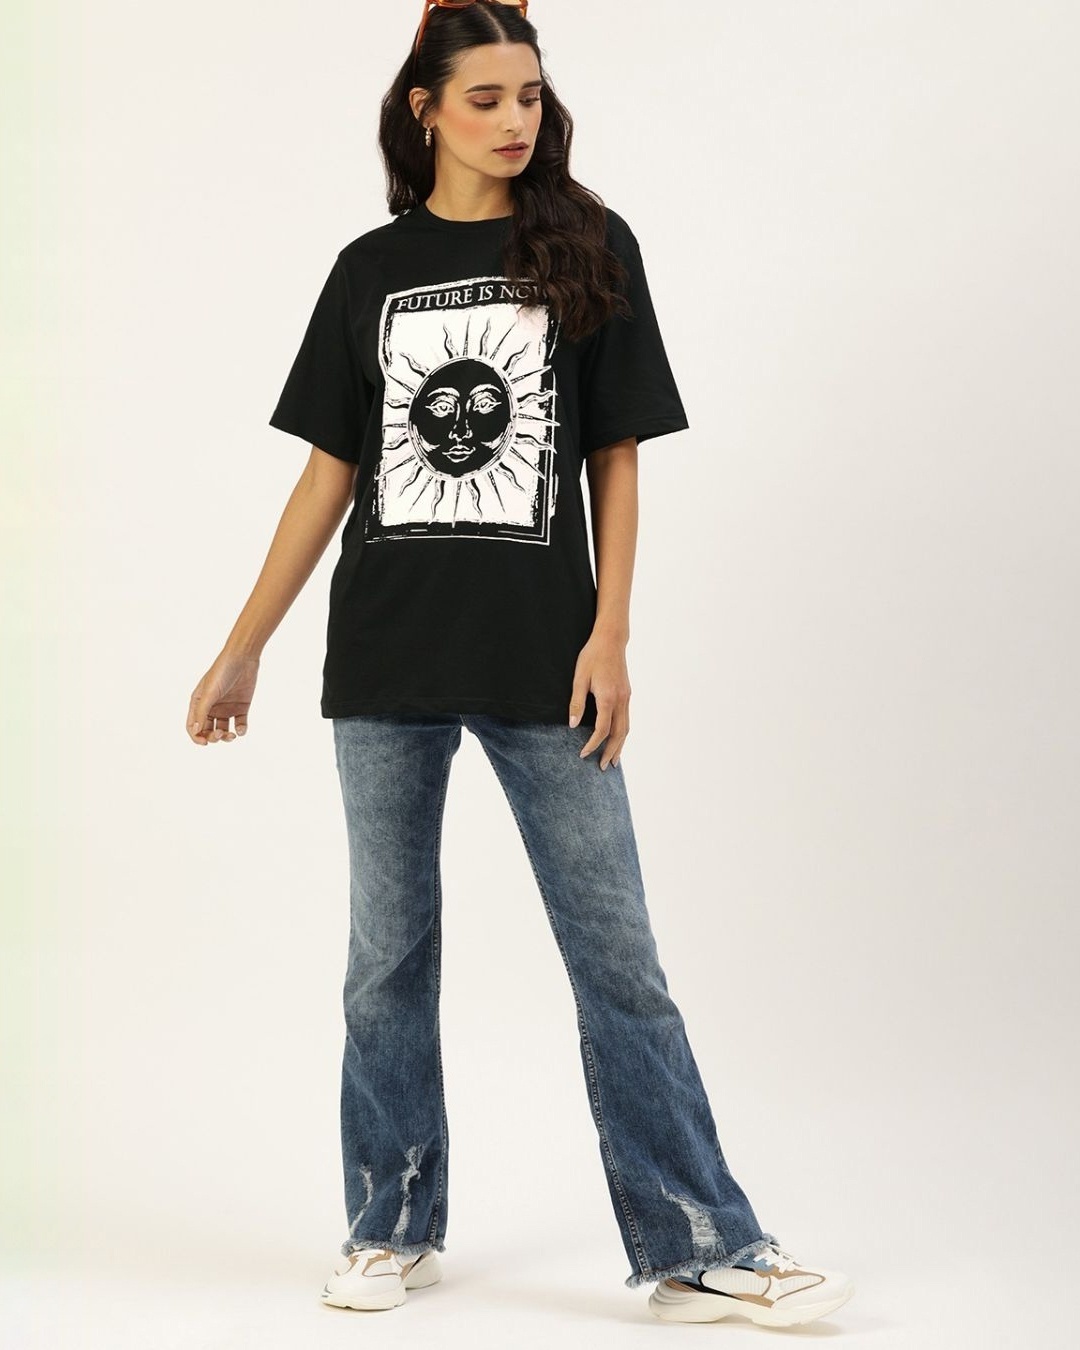 Shop Women's Black Graphic Print T-shirt